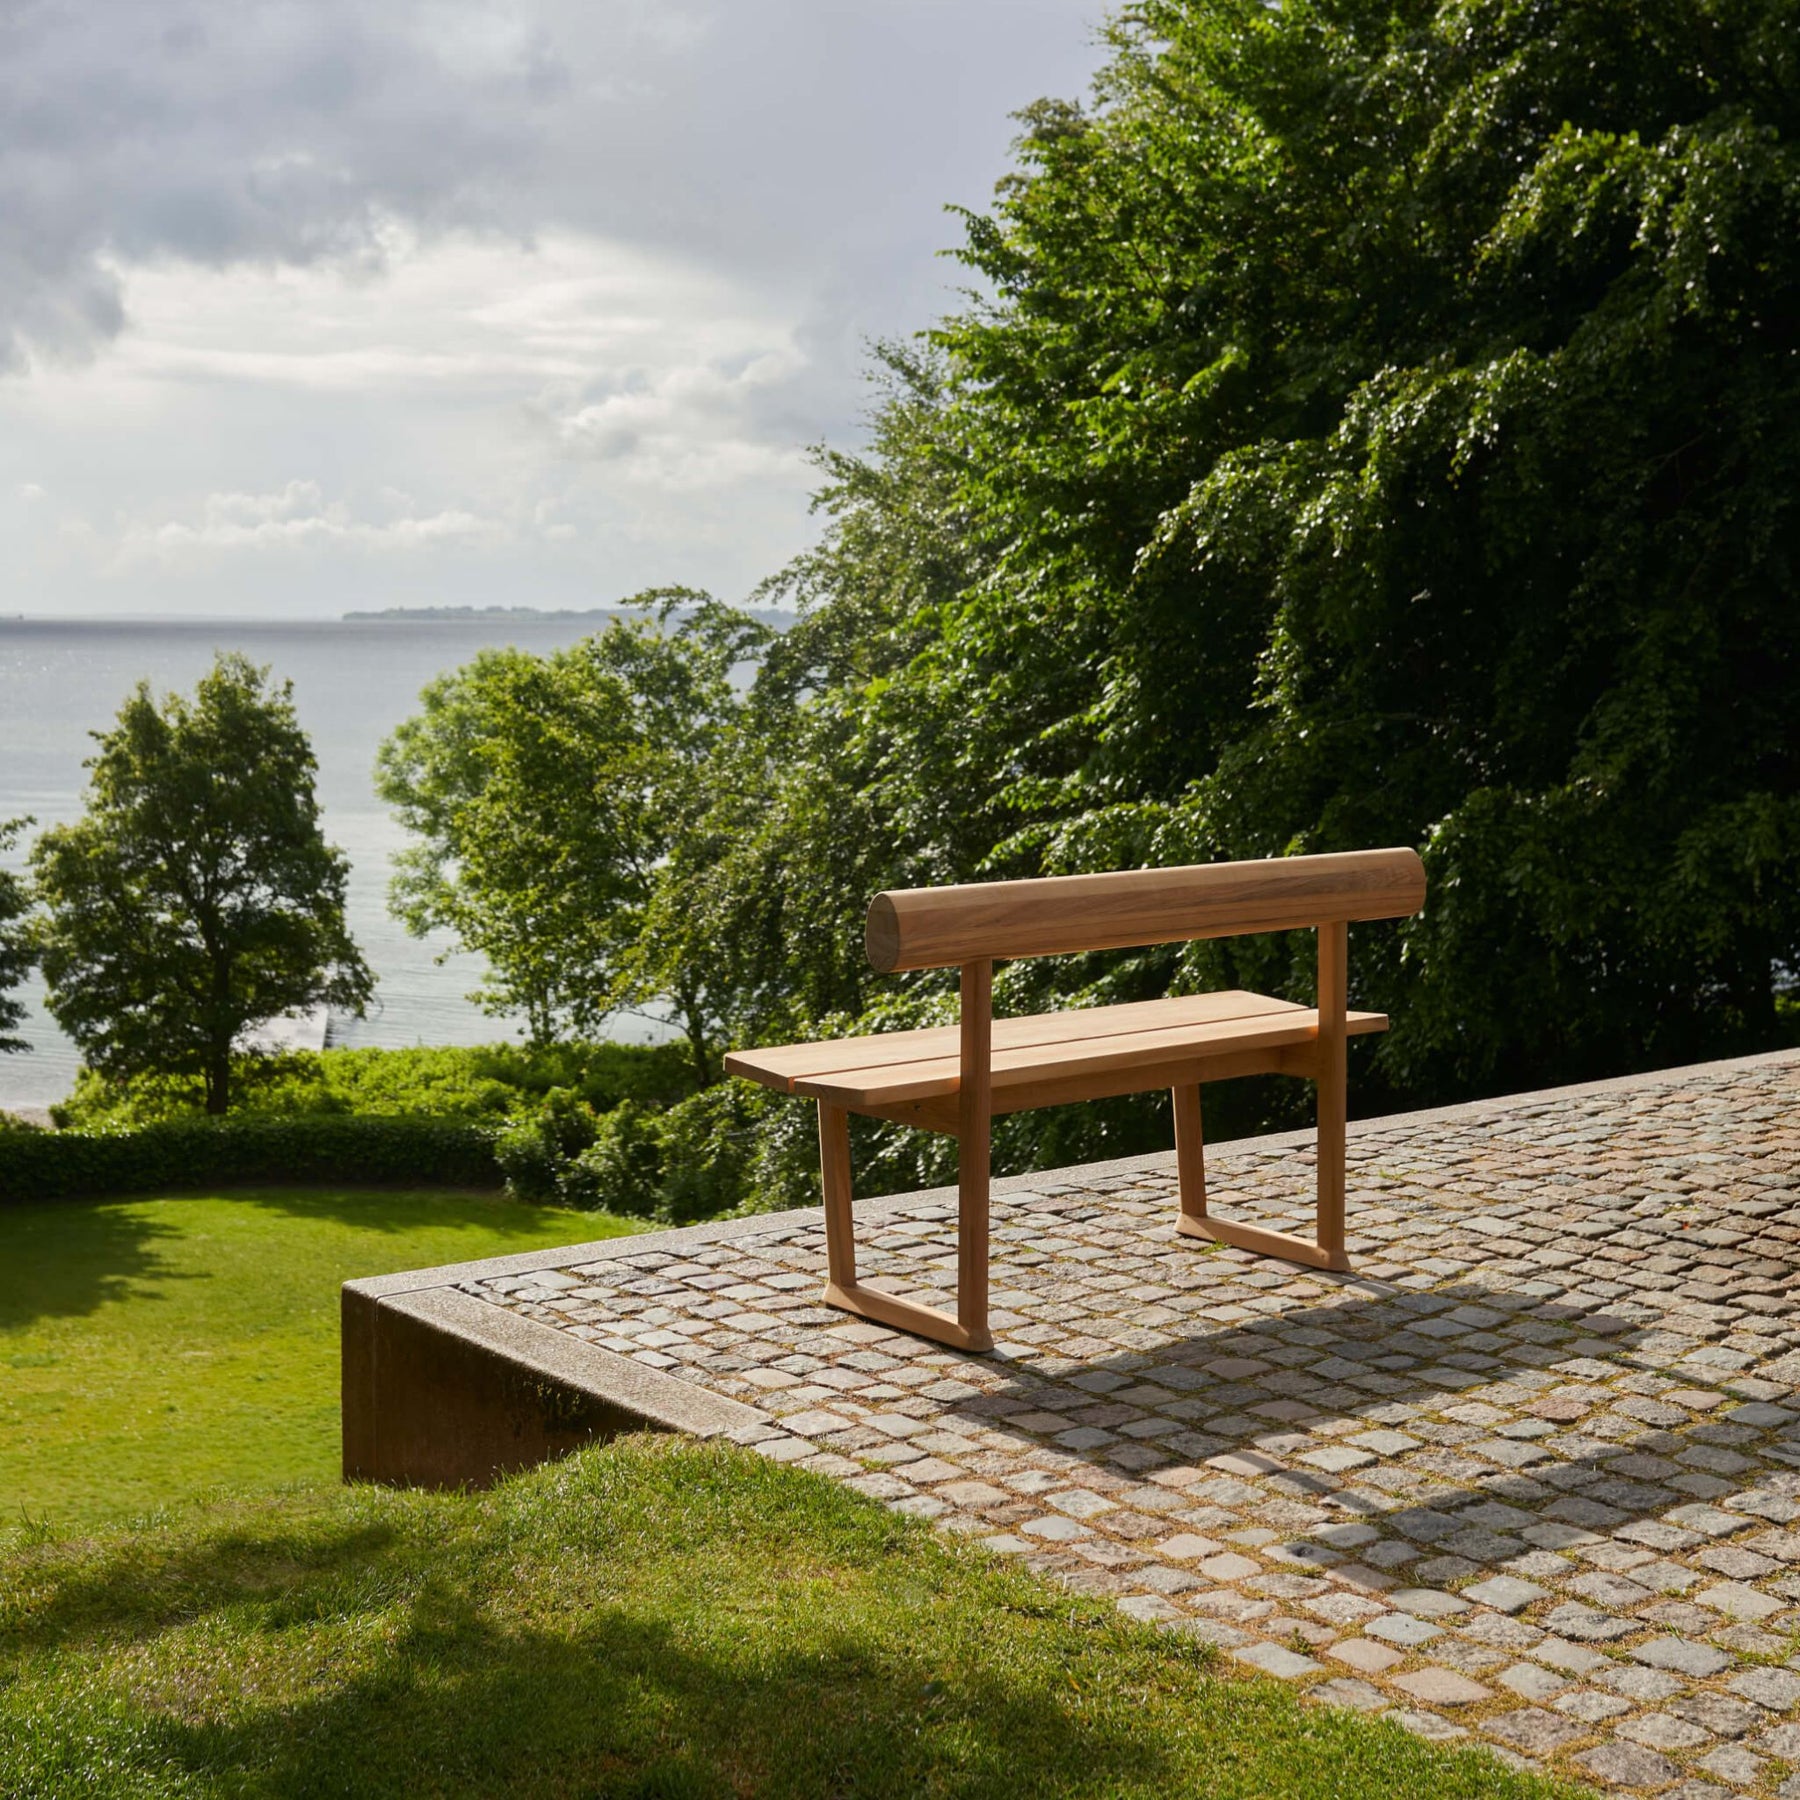 Fritz Hansen Skagerak Banco Bench on Cobblestone Terrace Overlooking Sea